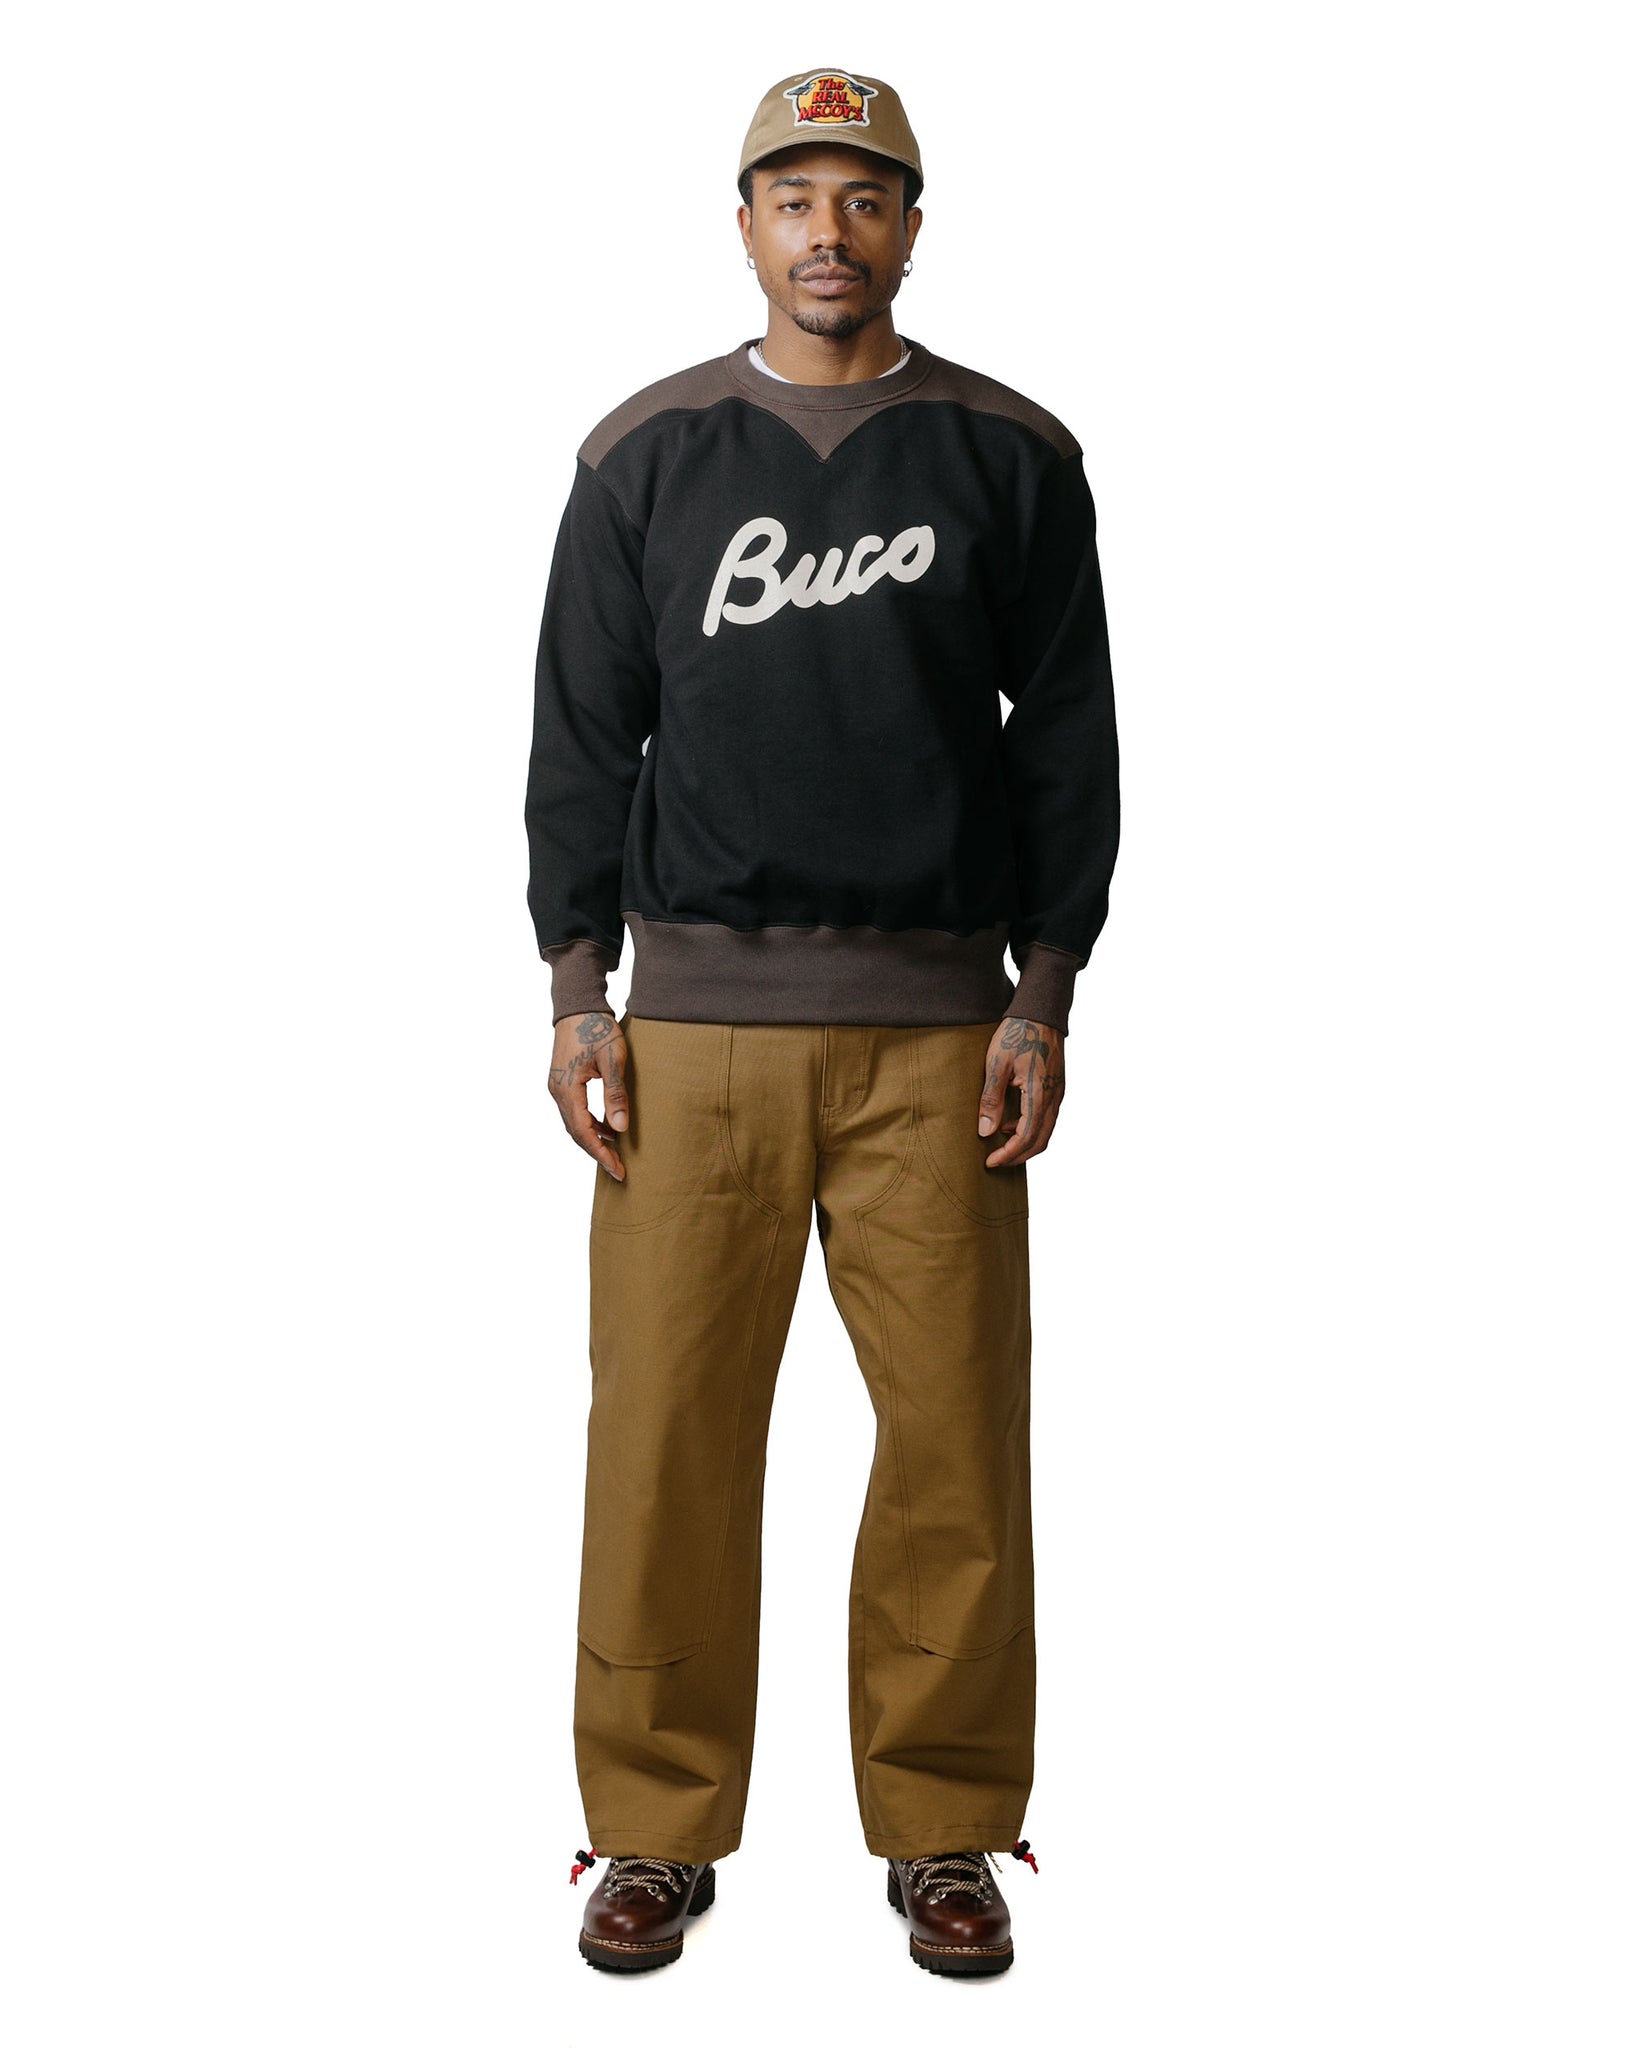 The Real McCoy's BC23105 Buco Two-Tone Sweatshirt / Buco Black/Grey model full